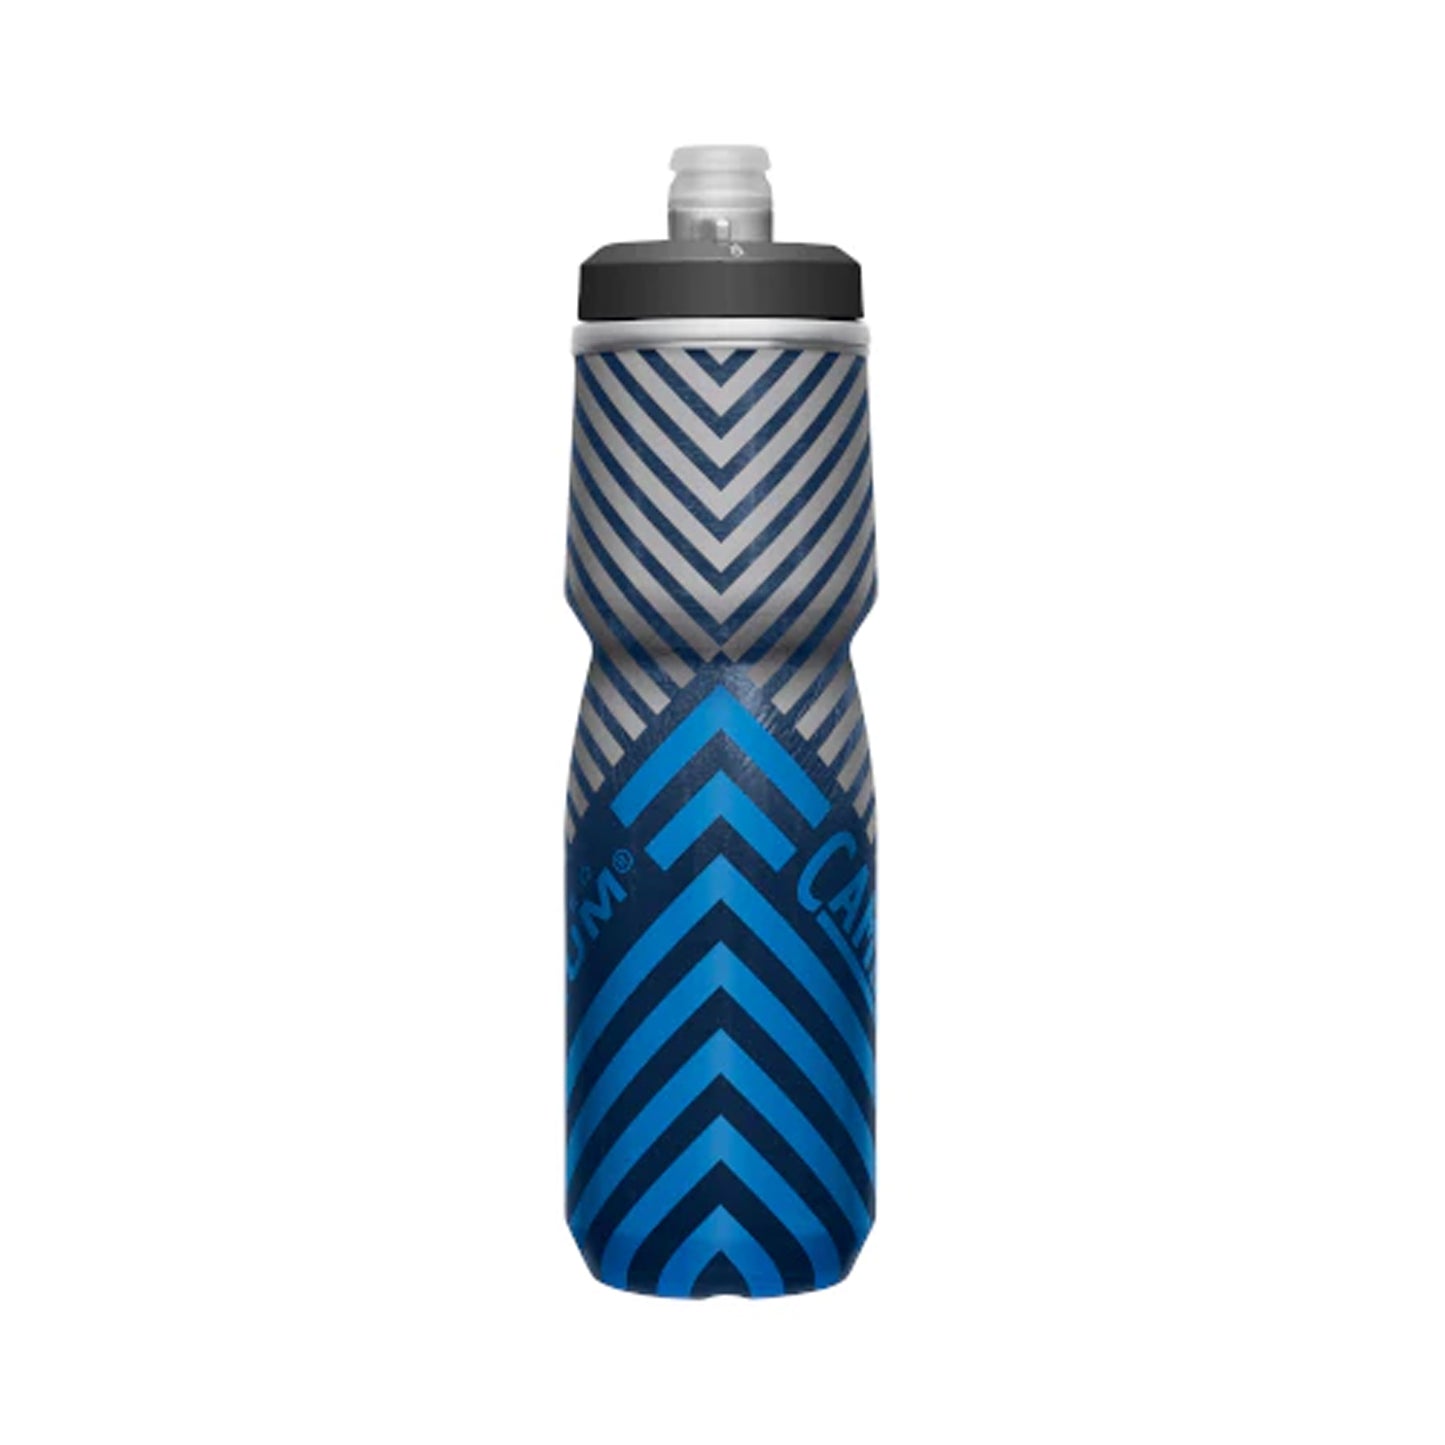 Camelbak Podium Chill Outdoor Bottle, Navy Stripe - 21OZ/620 ML - Best Price online Prokicksports.com